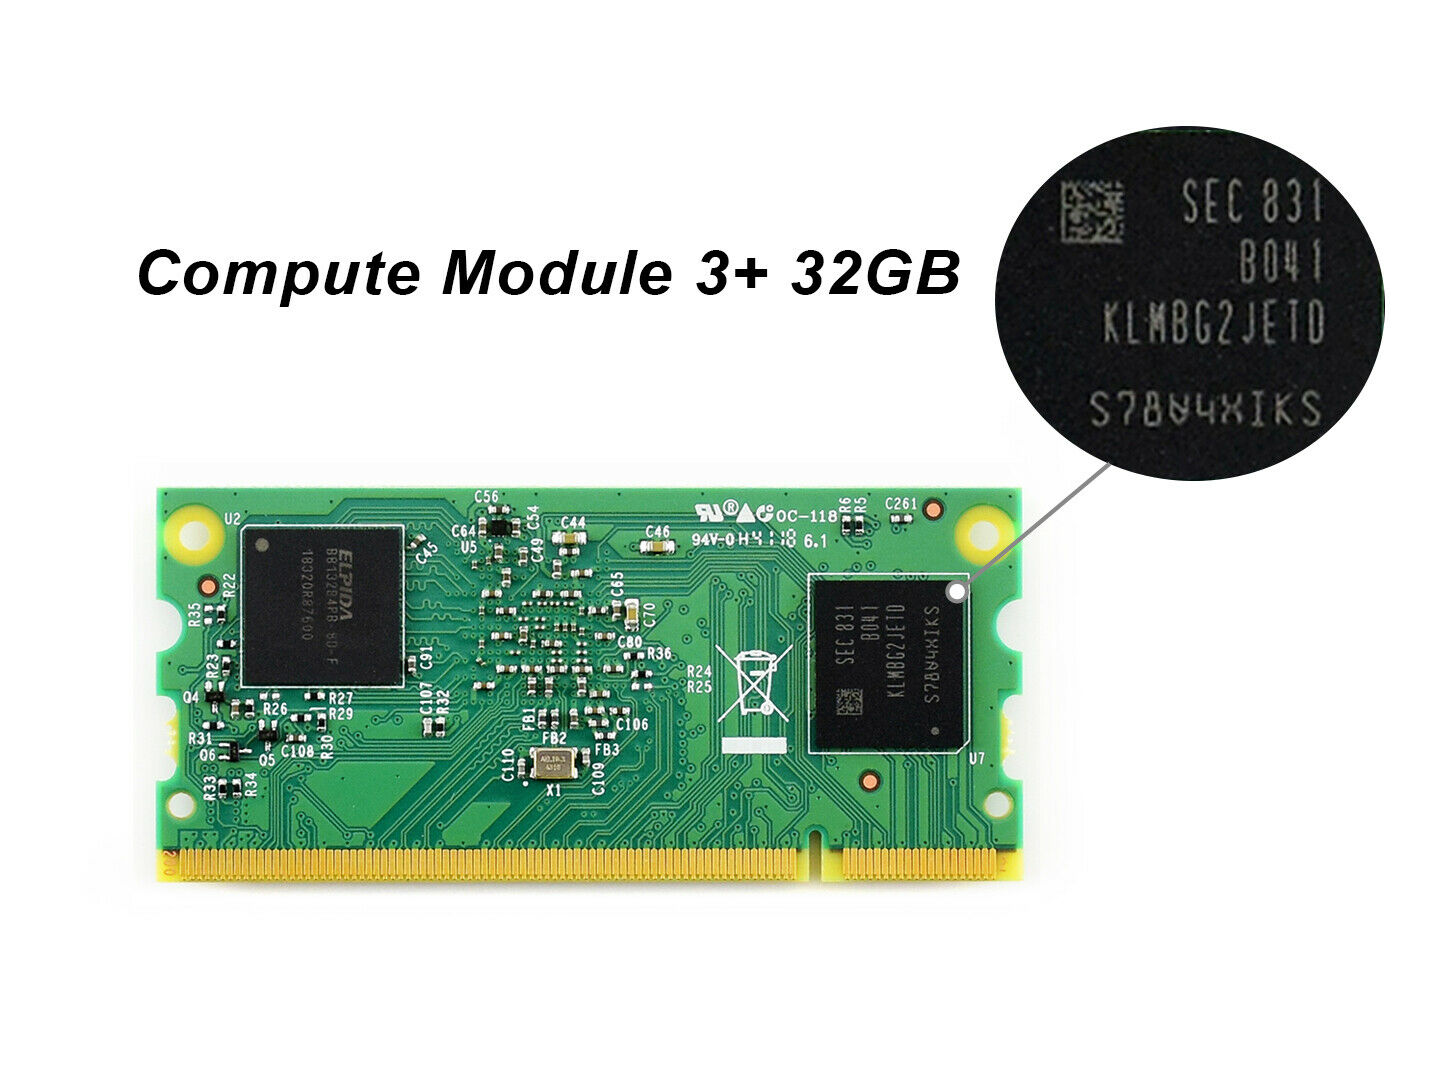 Raspberry Pi Compute Module 3+ with eMMC storage